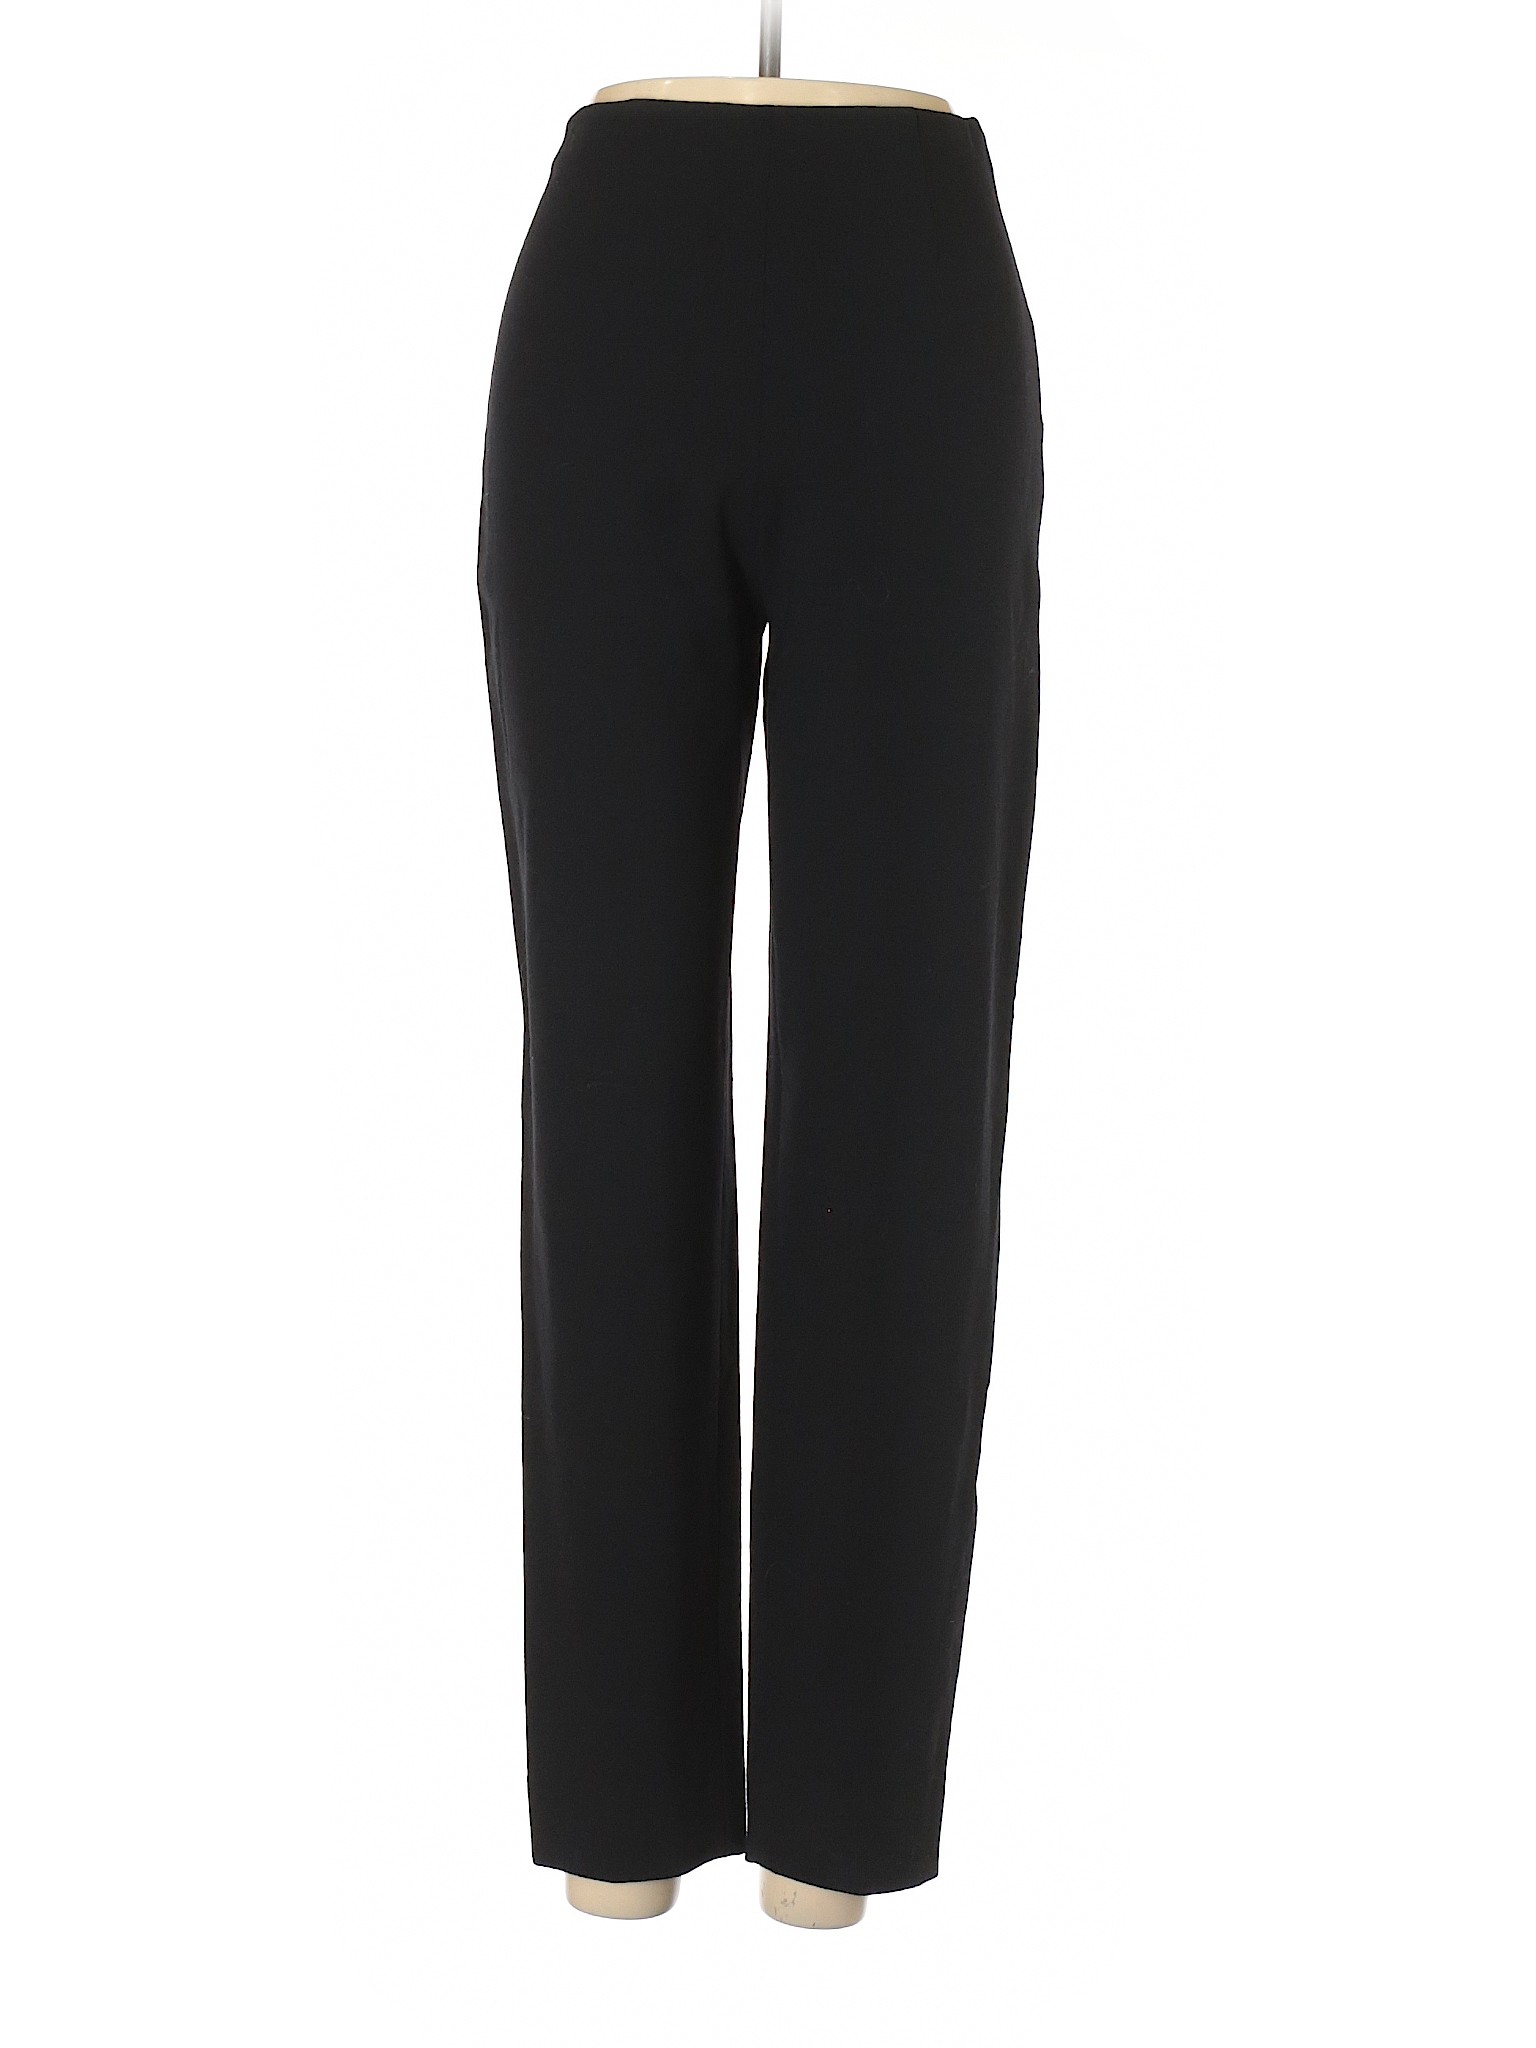 Emporio Armani Women Black Wool Pants 38 eur | eBay